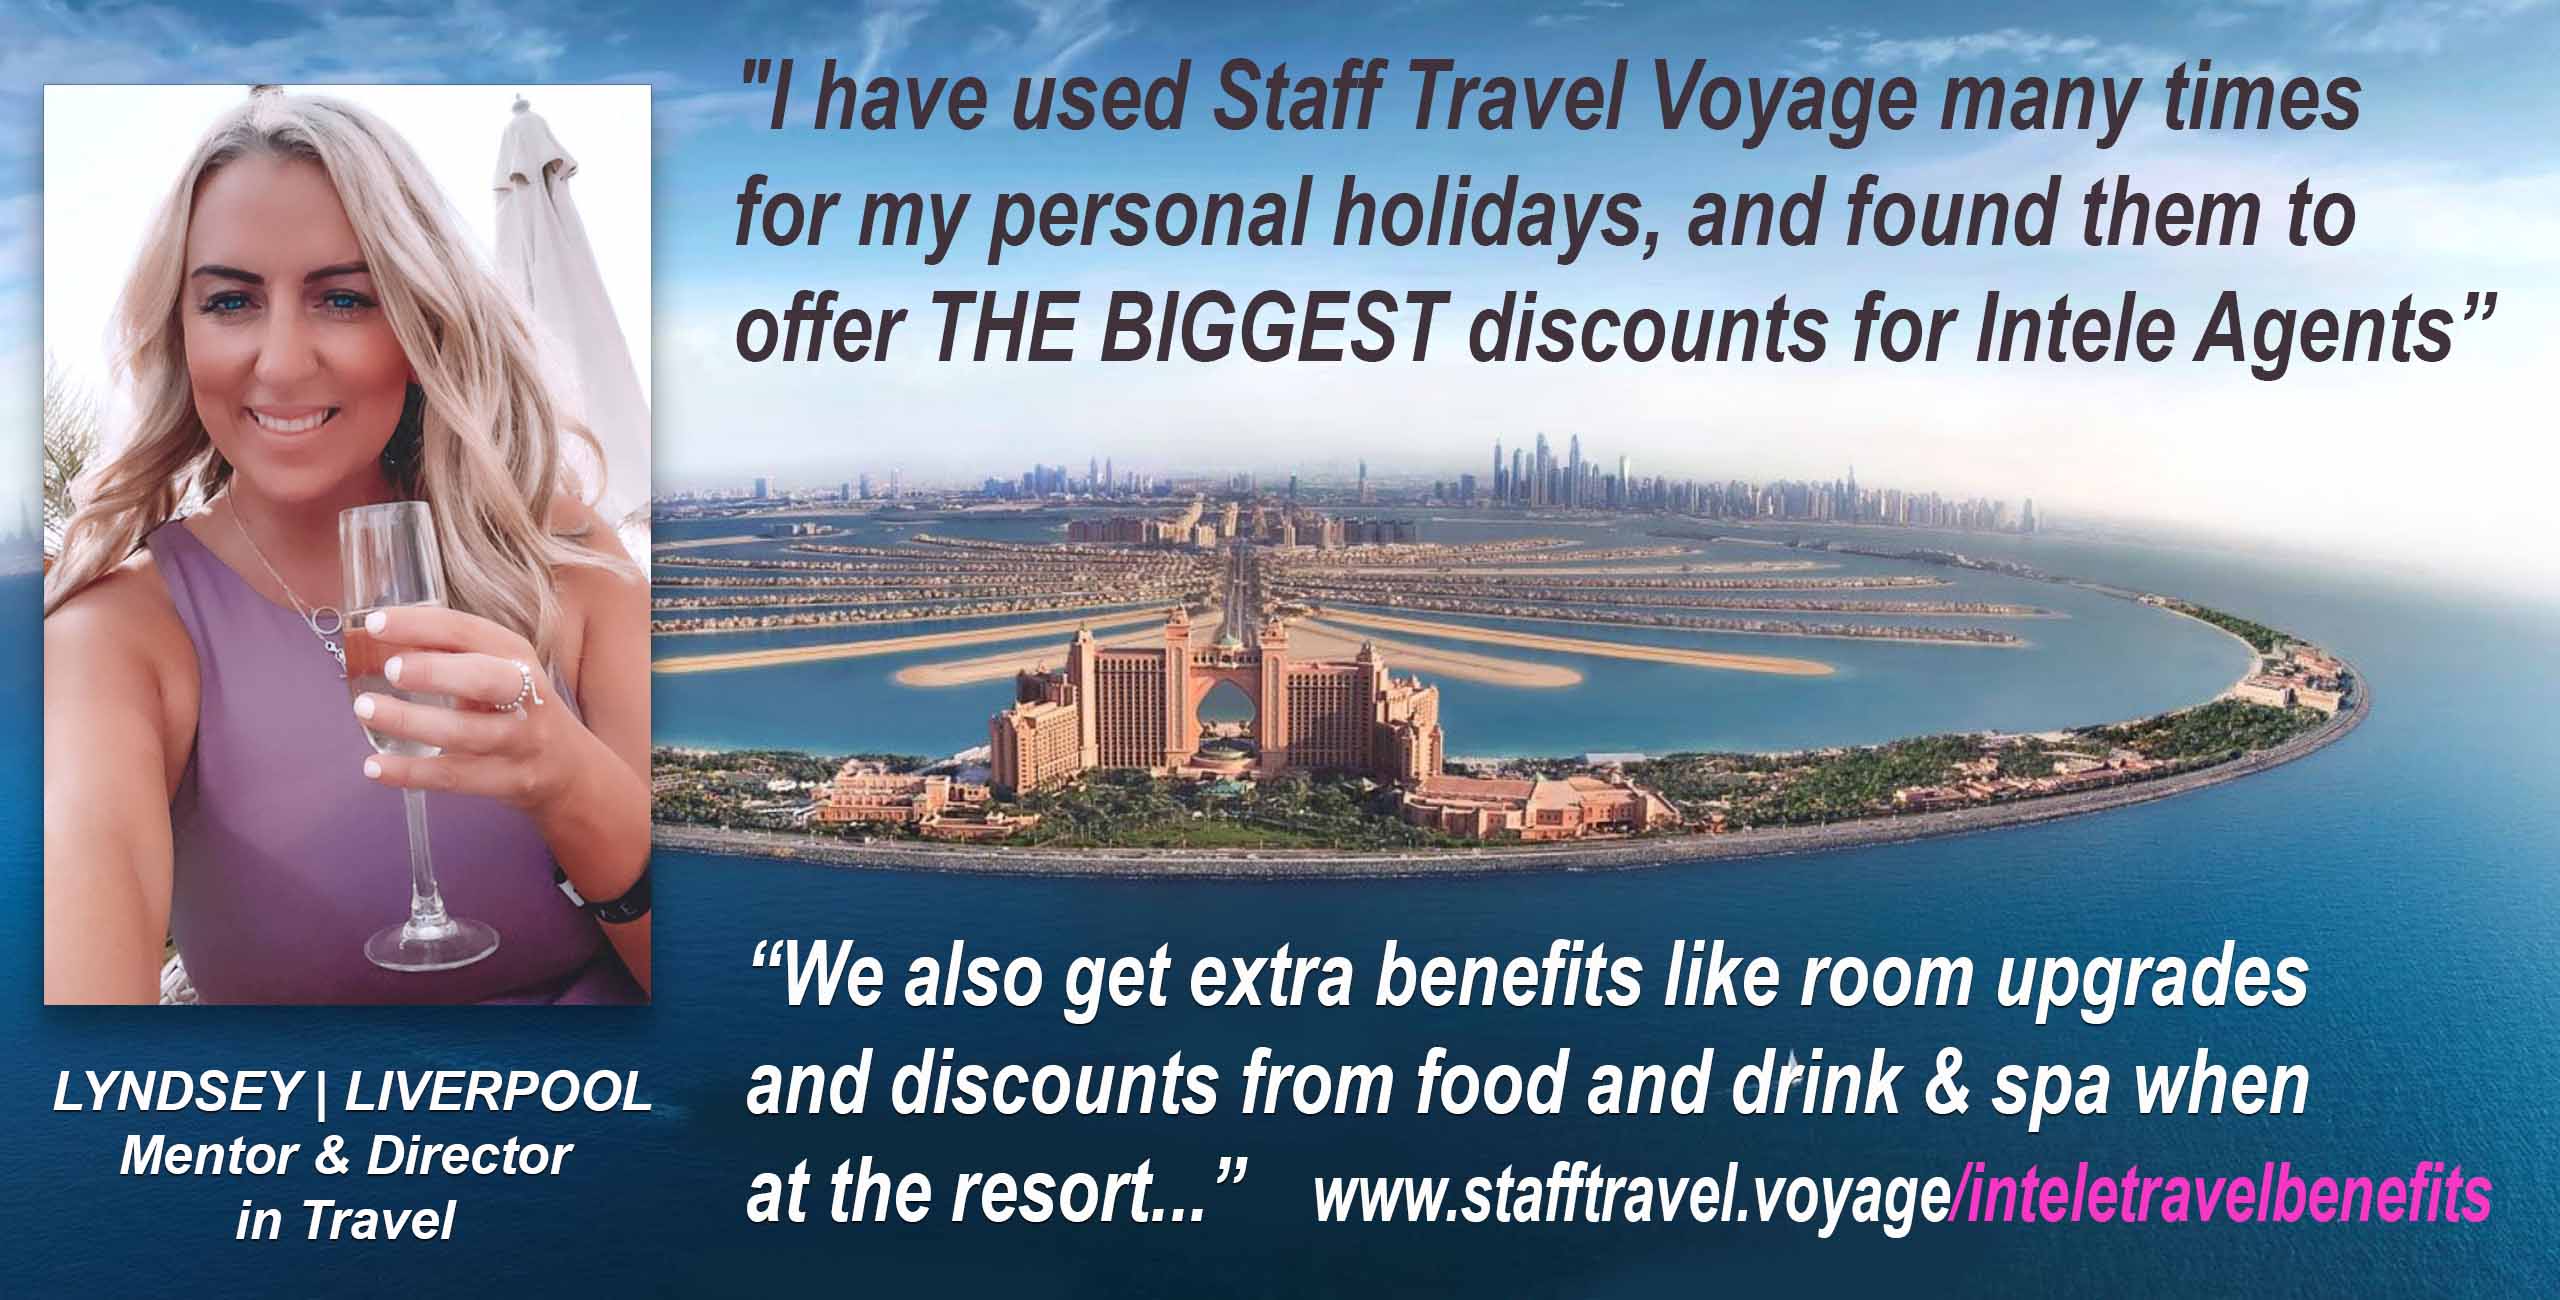 staff travel voyage inteletravel